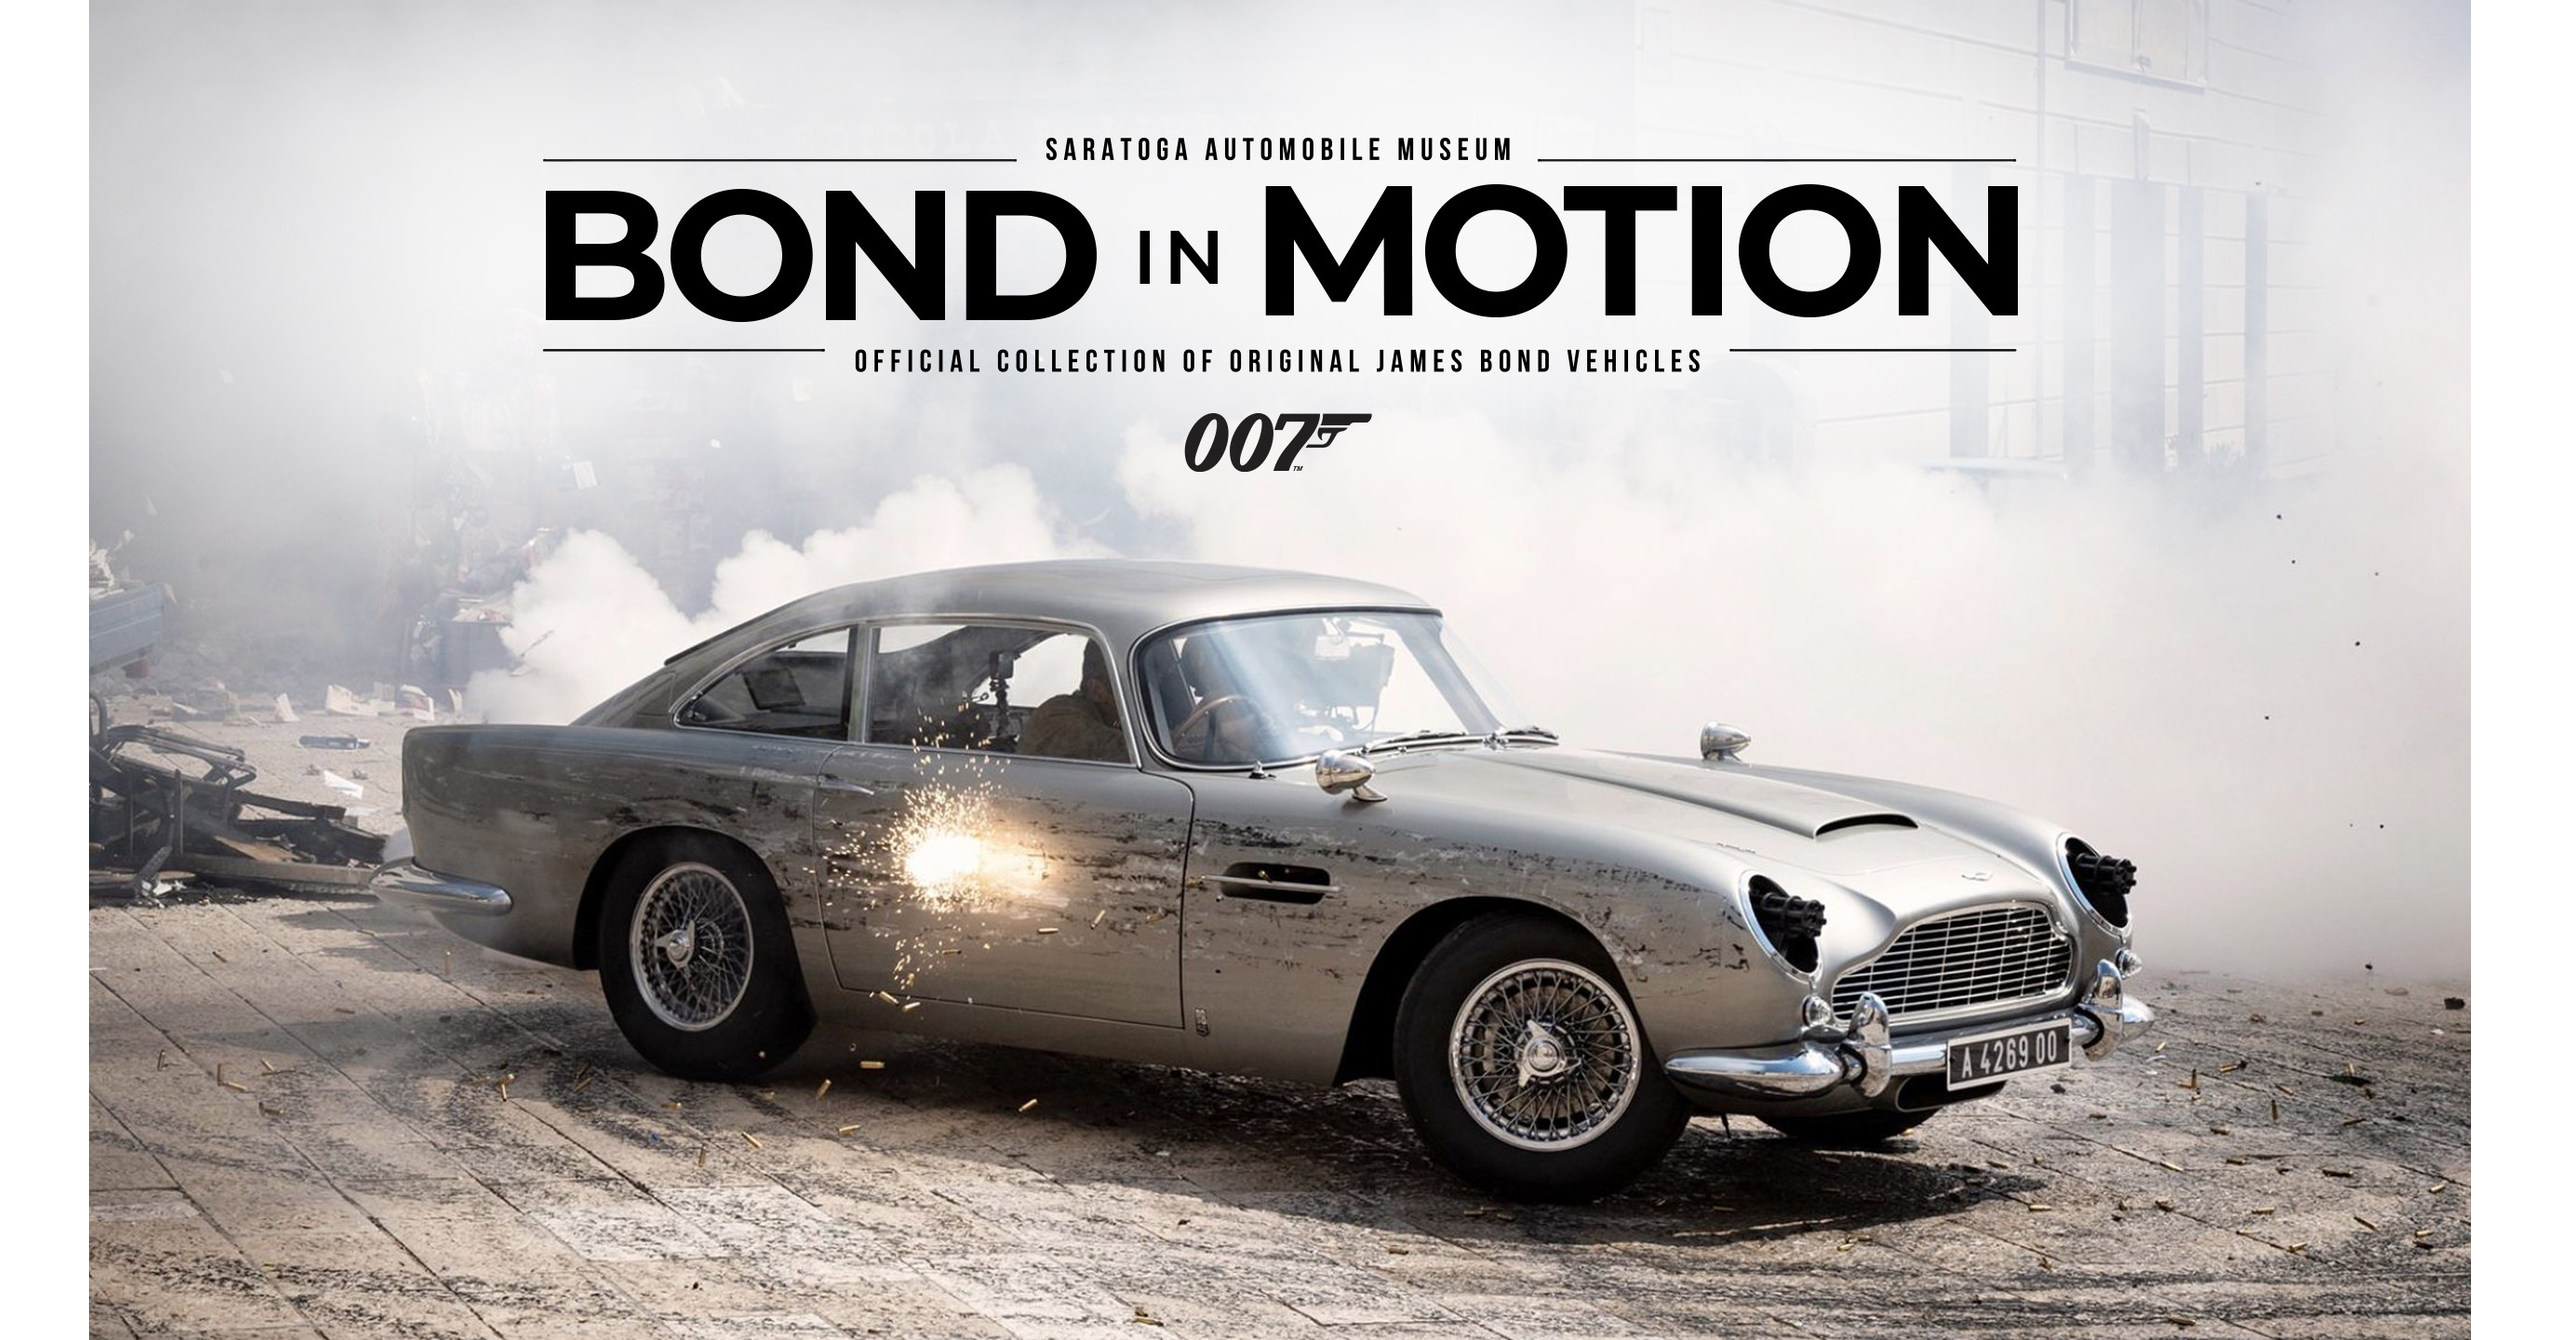 Bond_In_Motion_Image.jpg?p=facebook